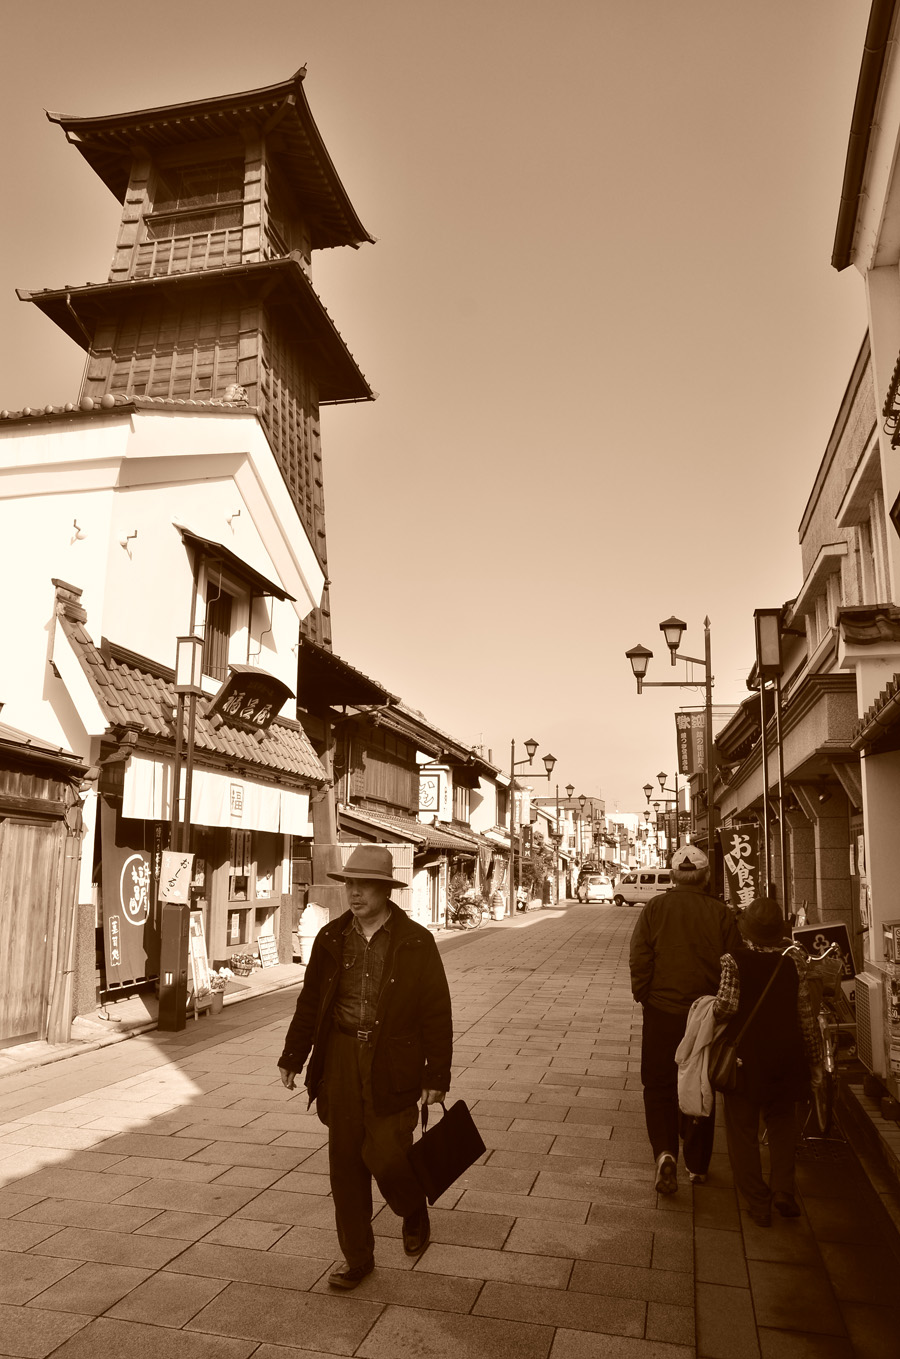 Old city and bell tower in Kawagoe, Saitama Pref.